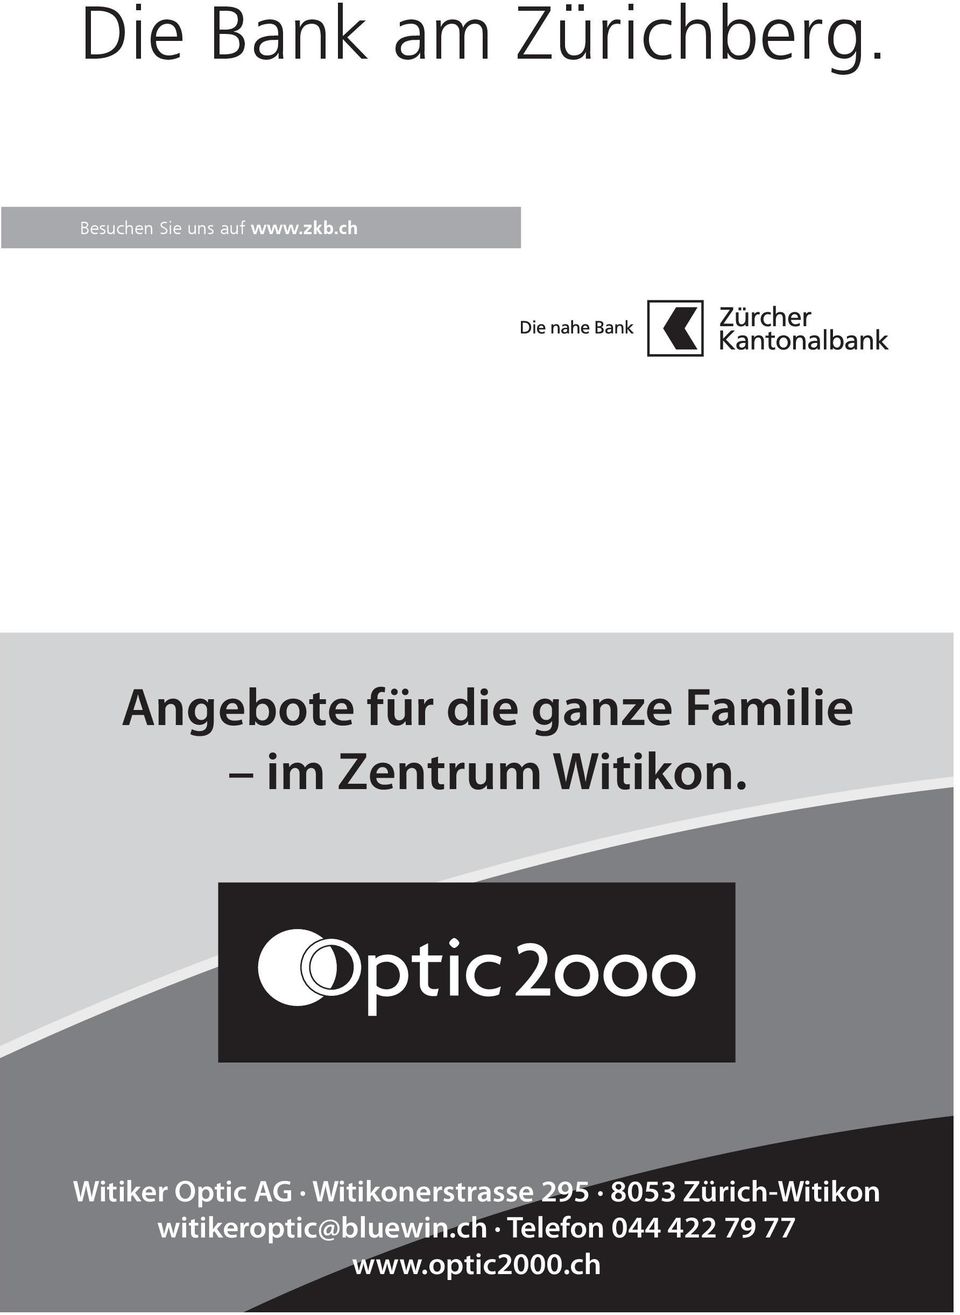 Witiker Optic AG Witikonerstrasse 295 8053